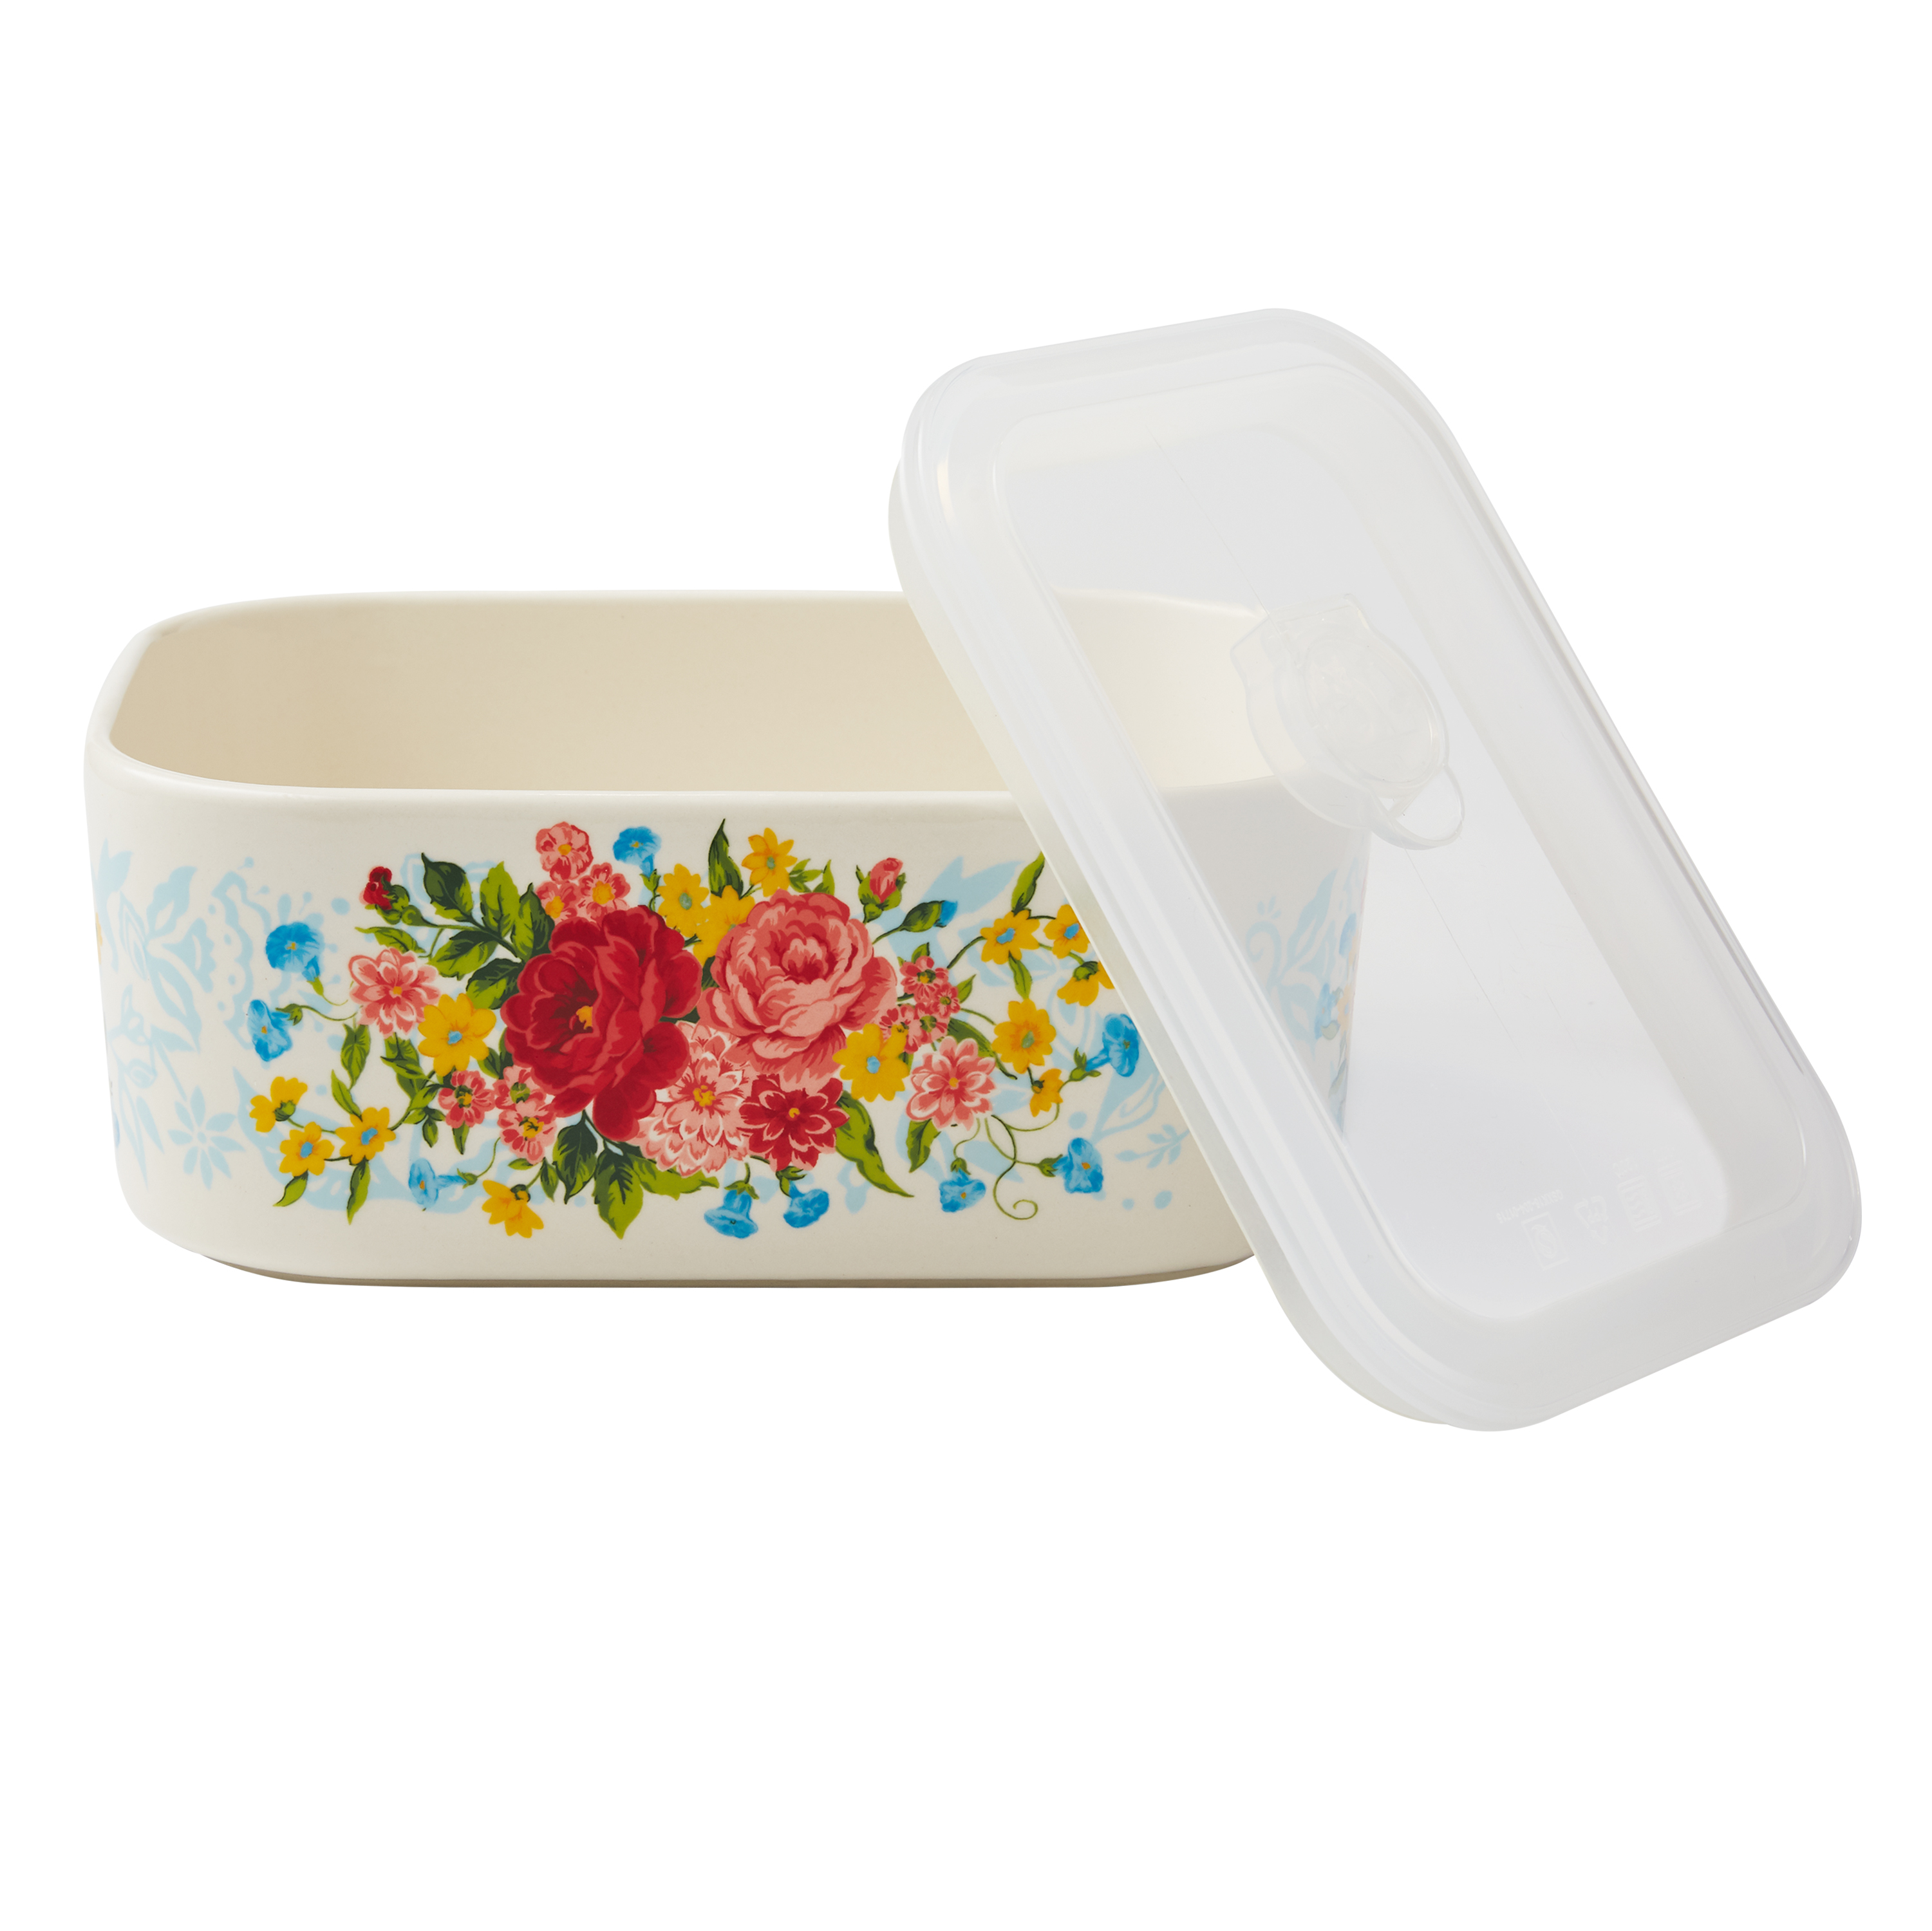 The Pioneer Woman Sweet Rose Rectangle Ceramic Nesting Bowl Set, 6 Piece Set - image 4 of 6